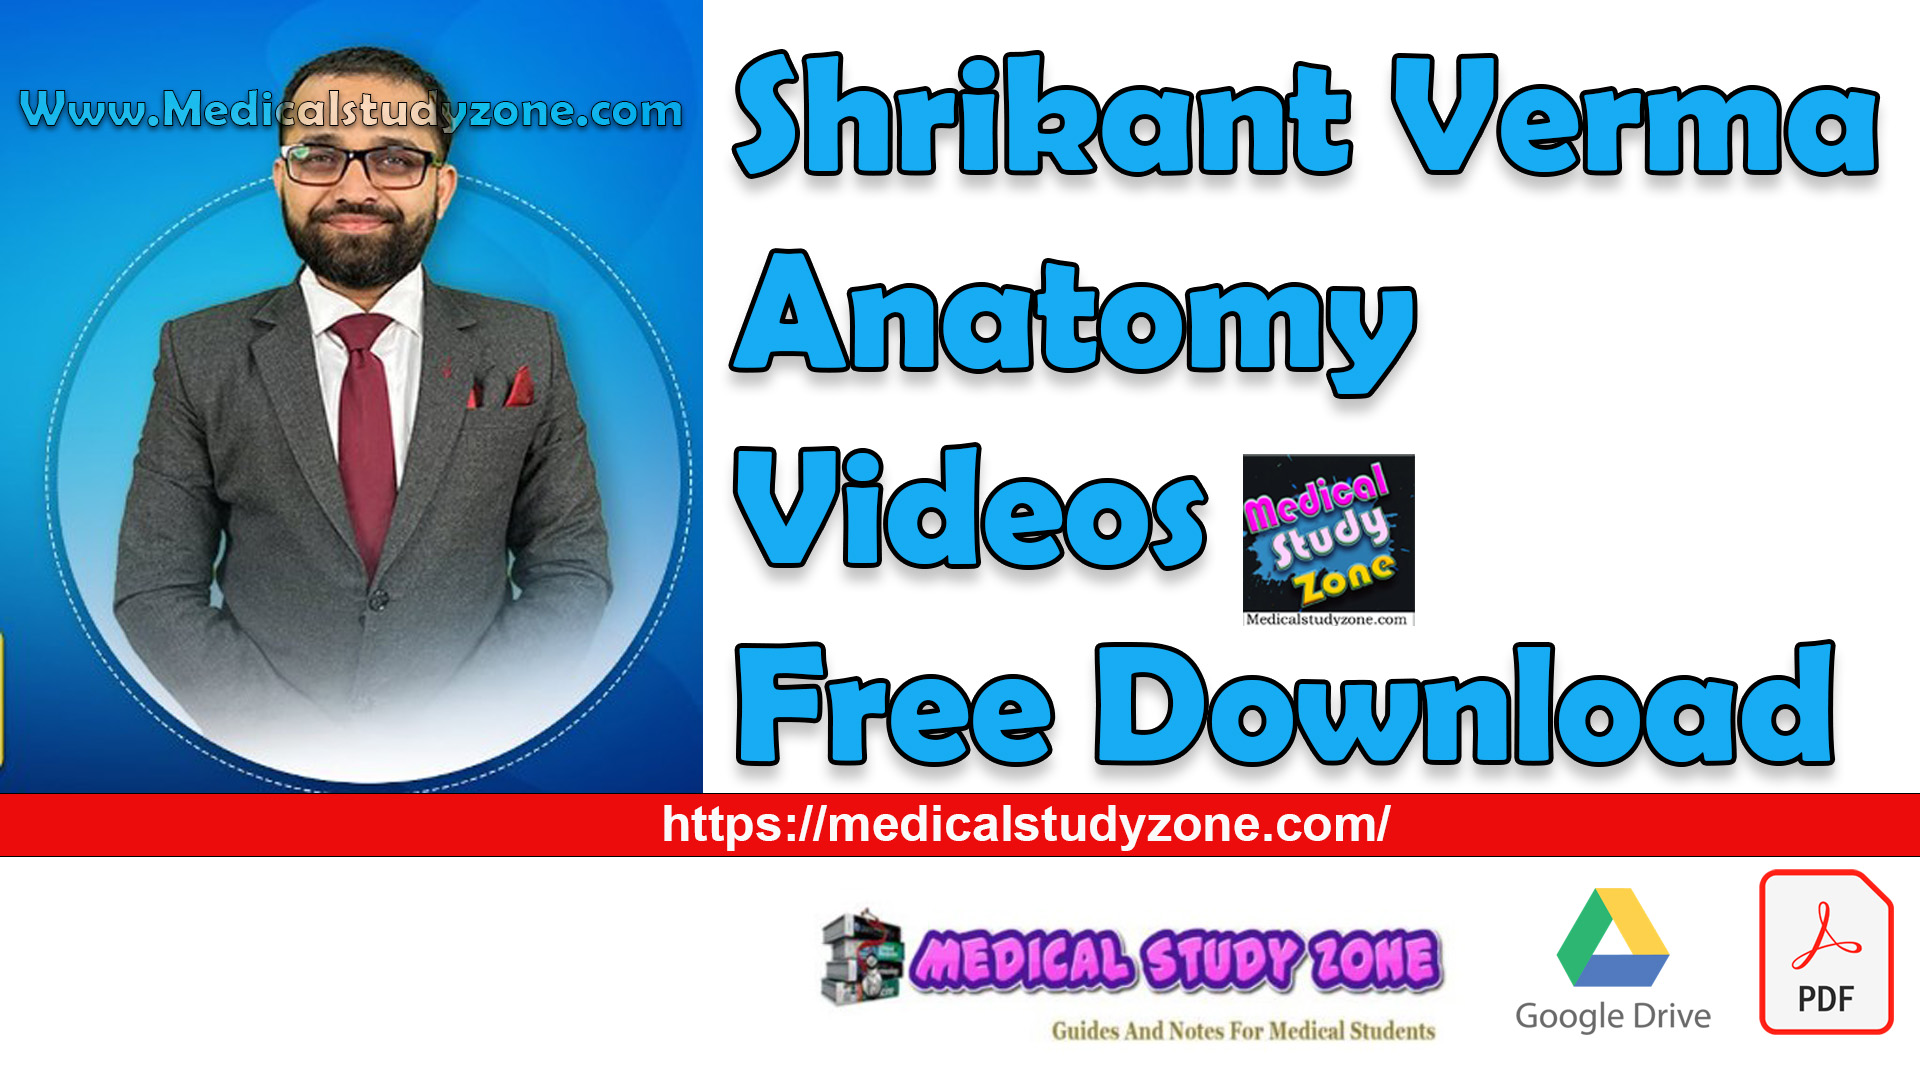 Shrikant Verma Anatomy Videos Free Download